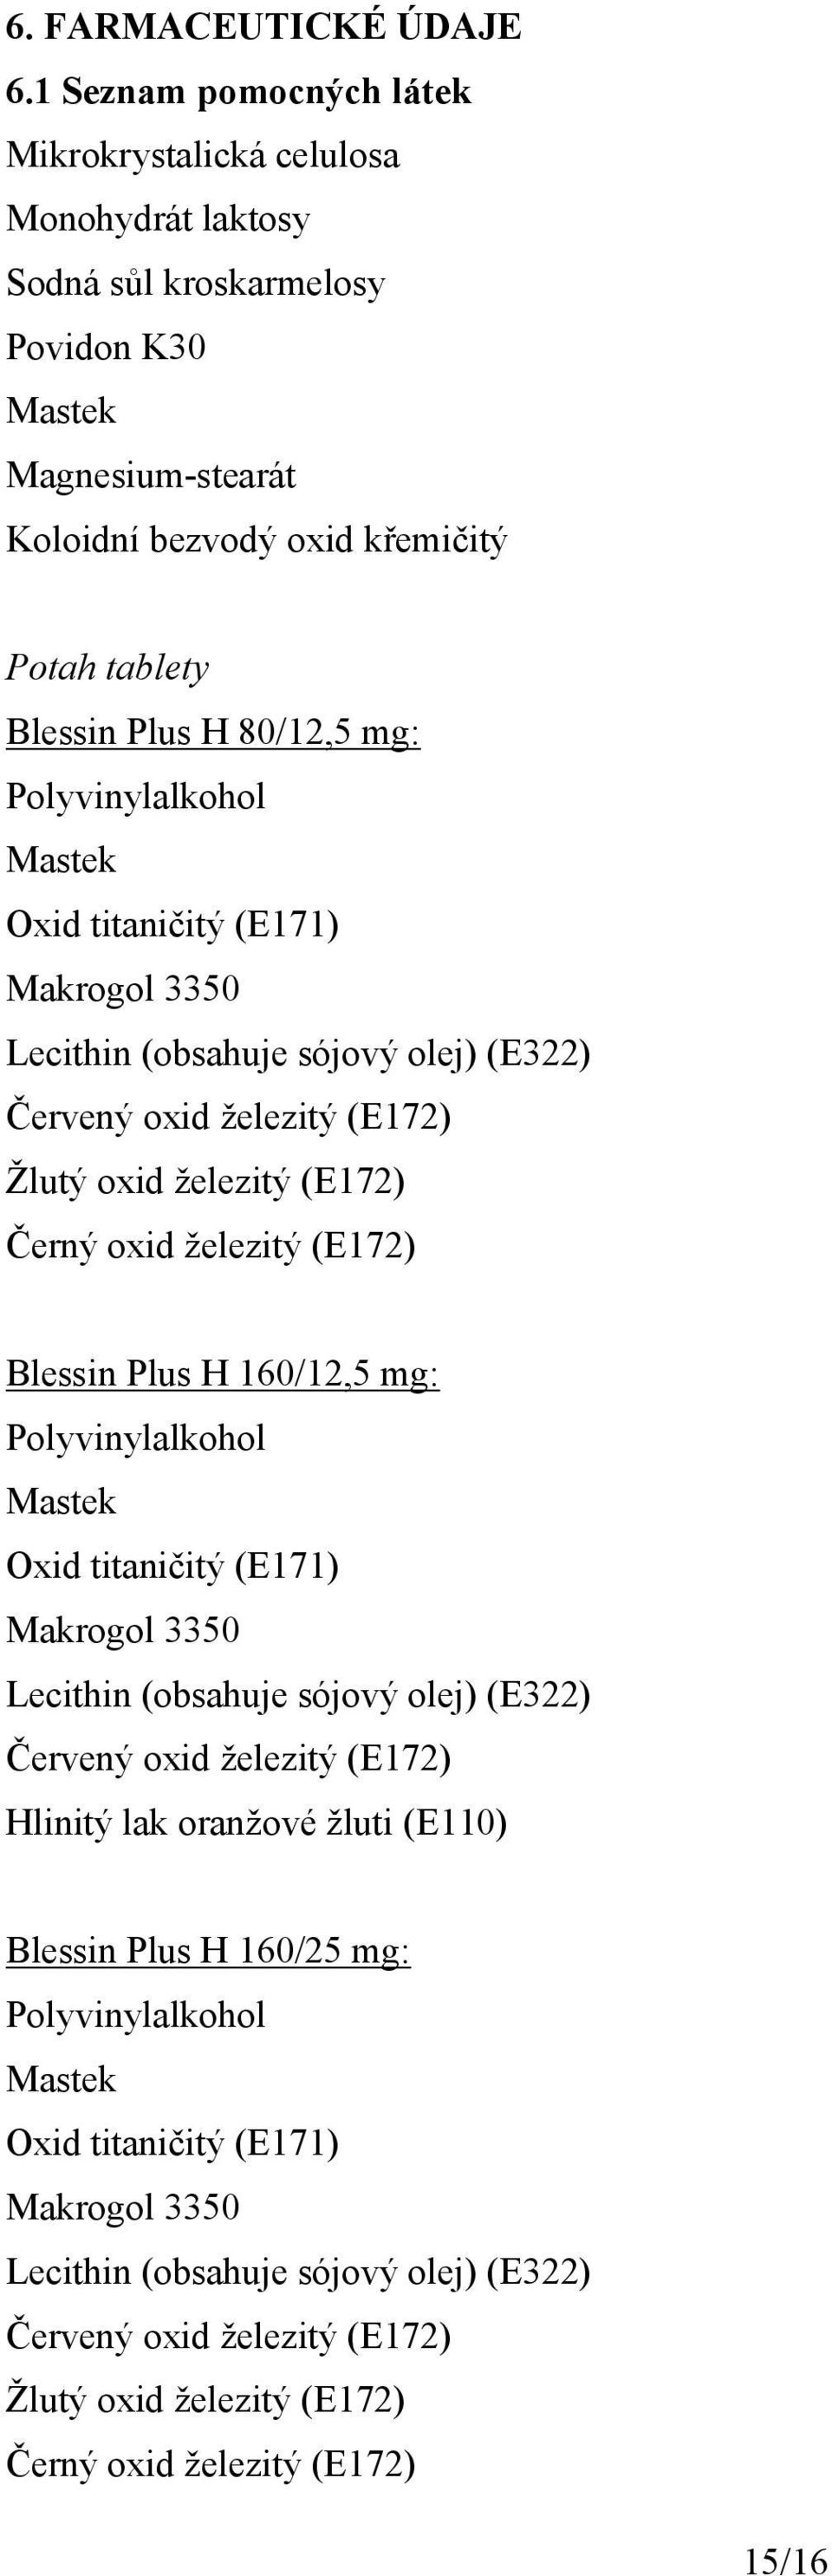 mg: Polyvinylalkohol Mastek Oxid titaničitý (E171) Makrogol 3350 Lecithin (obsahuje sójový olej) (E322) Červený oxid železitý (E172) Žlutý oxid železitý (E172) Černý oxid železitý (E172) Blessin Plus